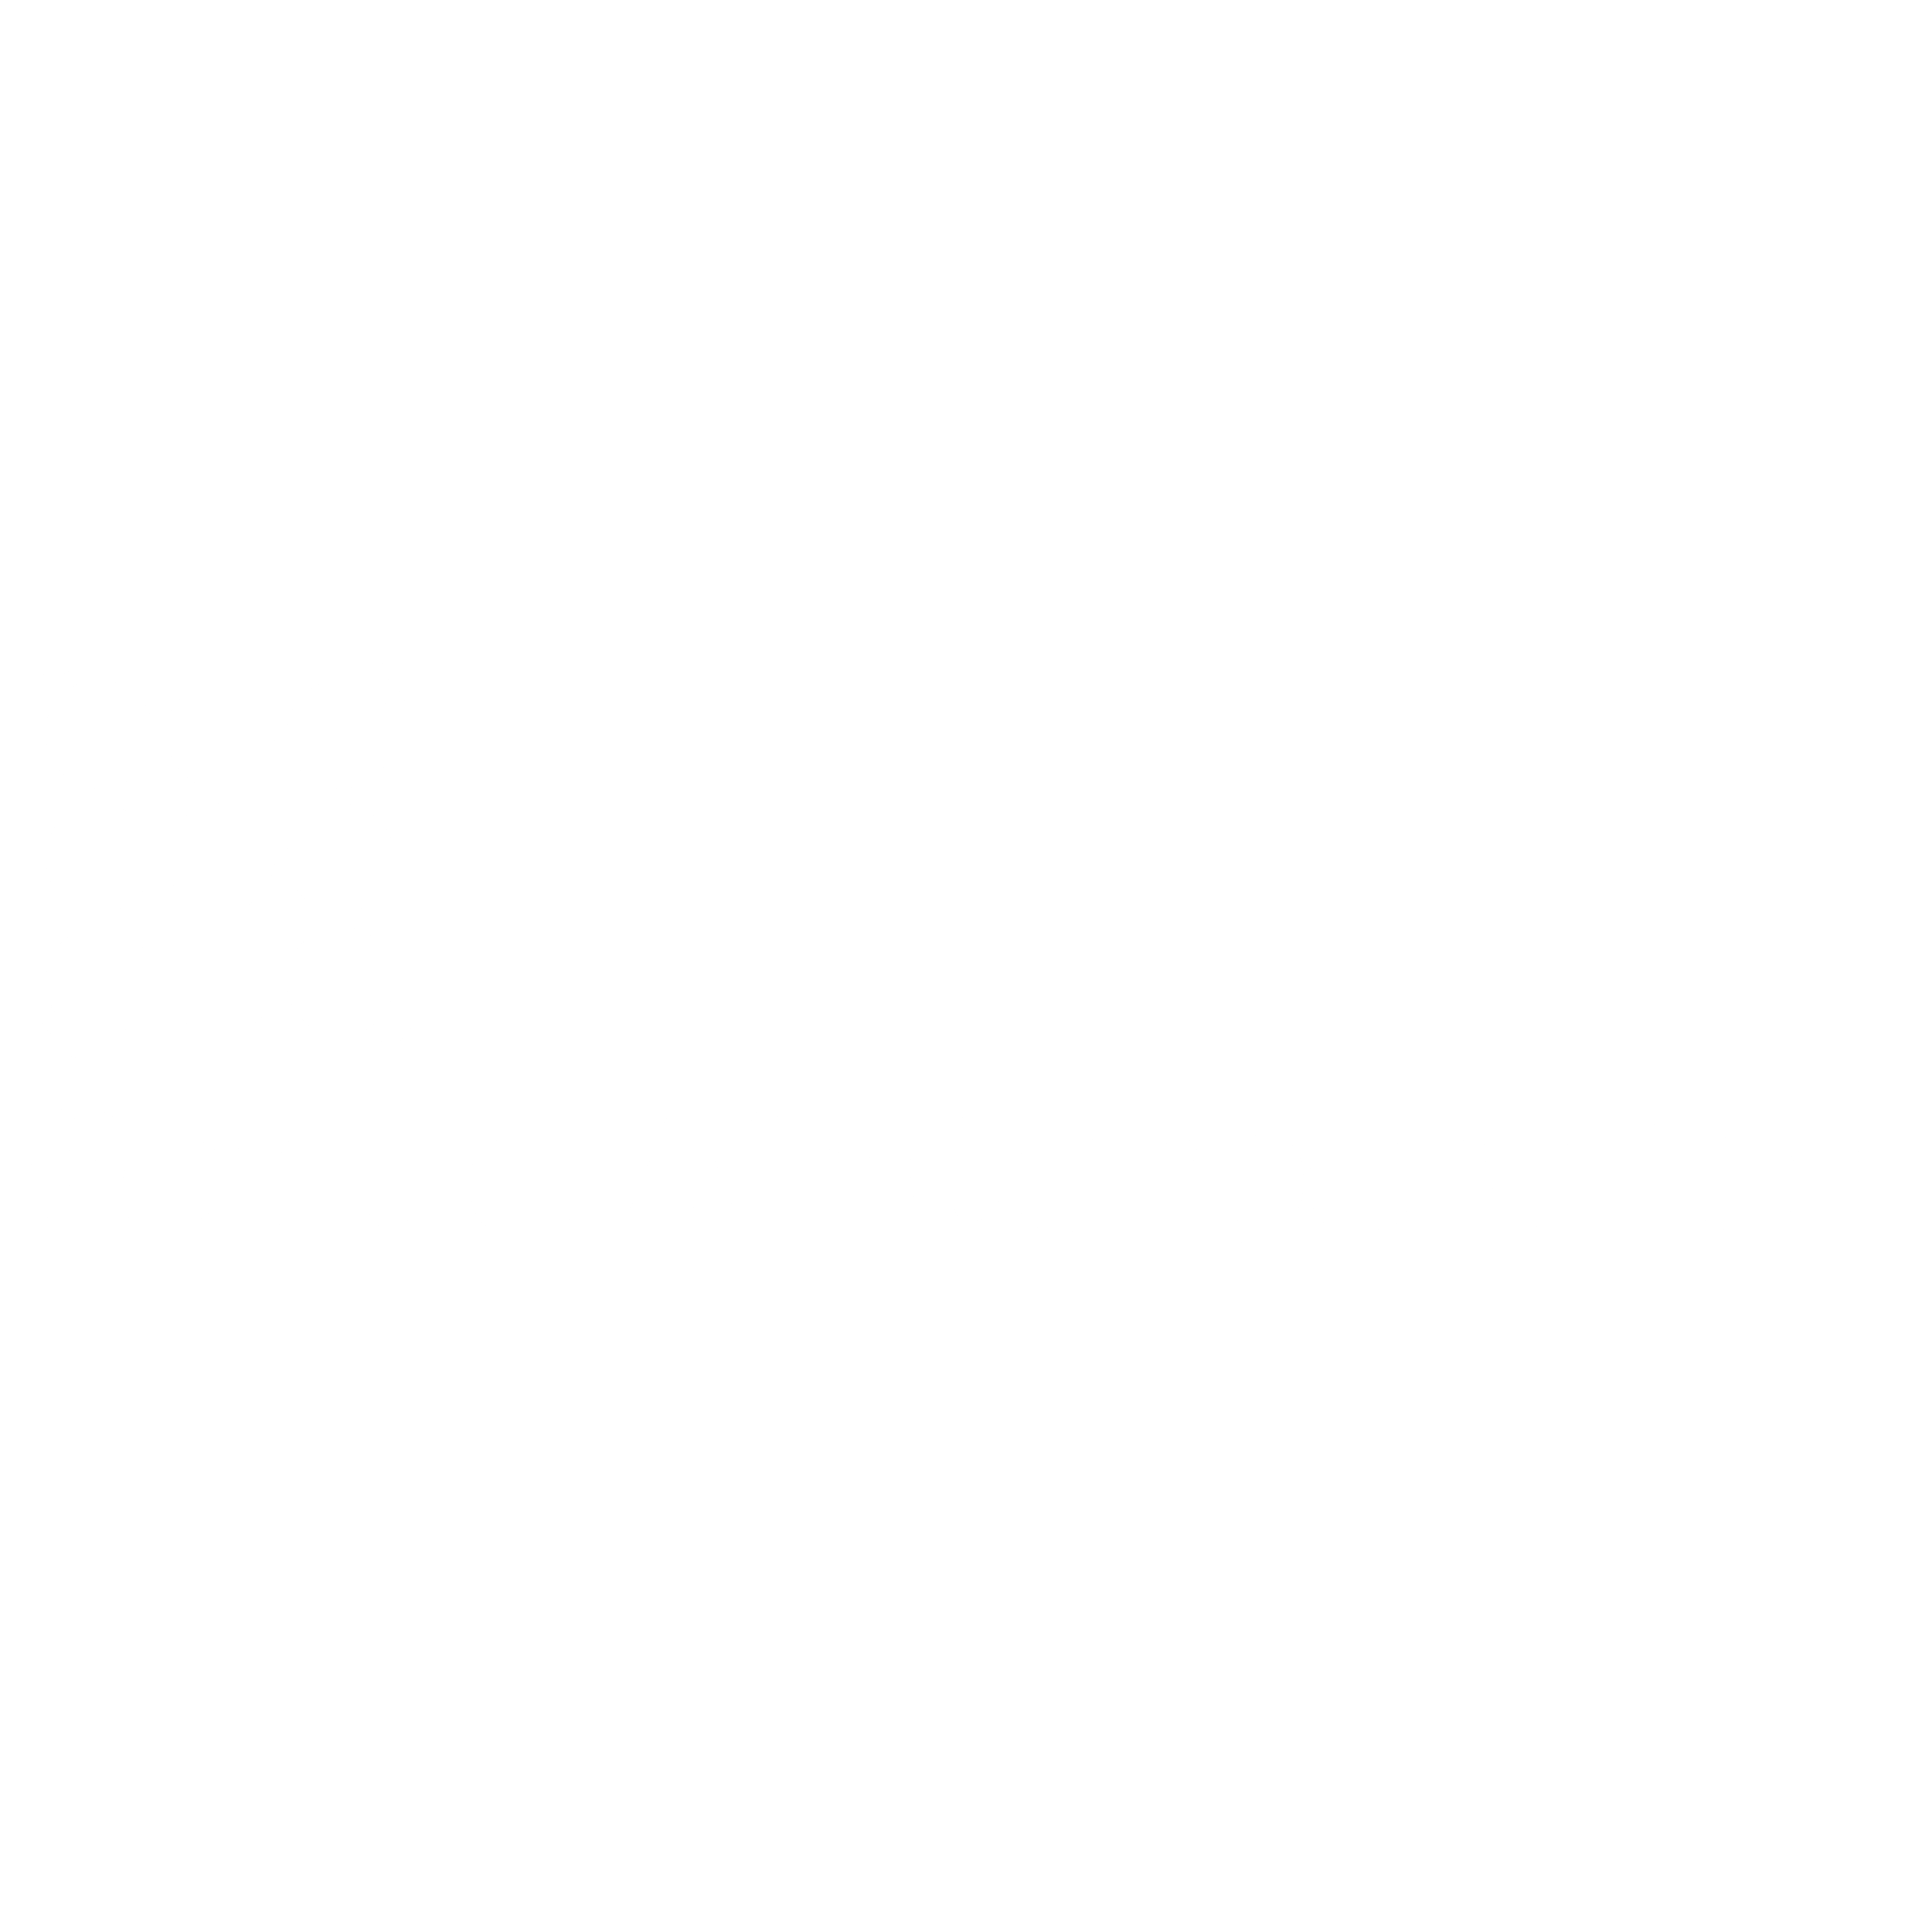 Sealed Air Logo - Sealed Air Corporation Logo PNG Transparent & SVG Vector